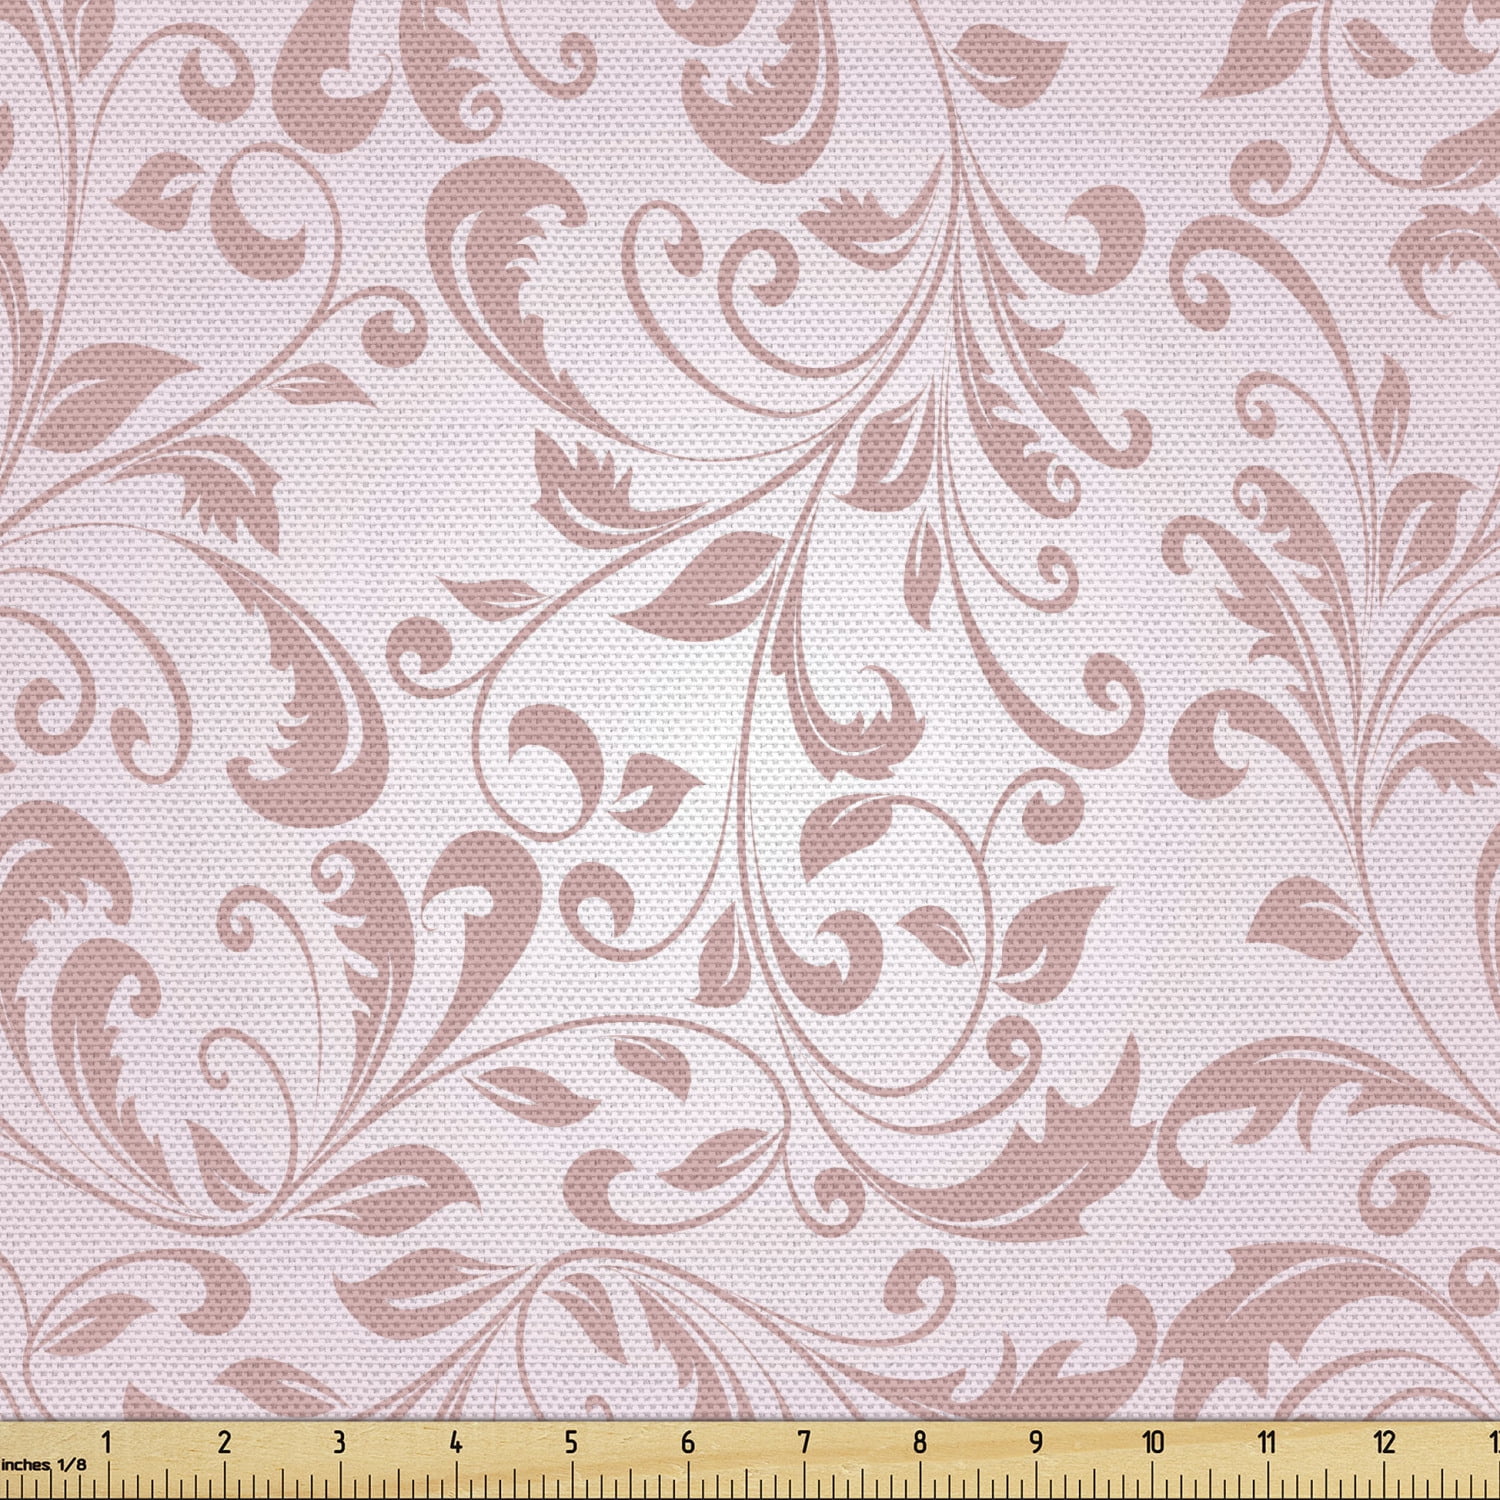 Soft Lush Pink Turquoise Damask Stripe Damask Curtain Decor Fabric Upholstery 